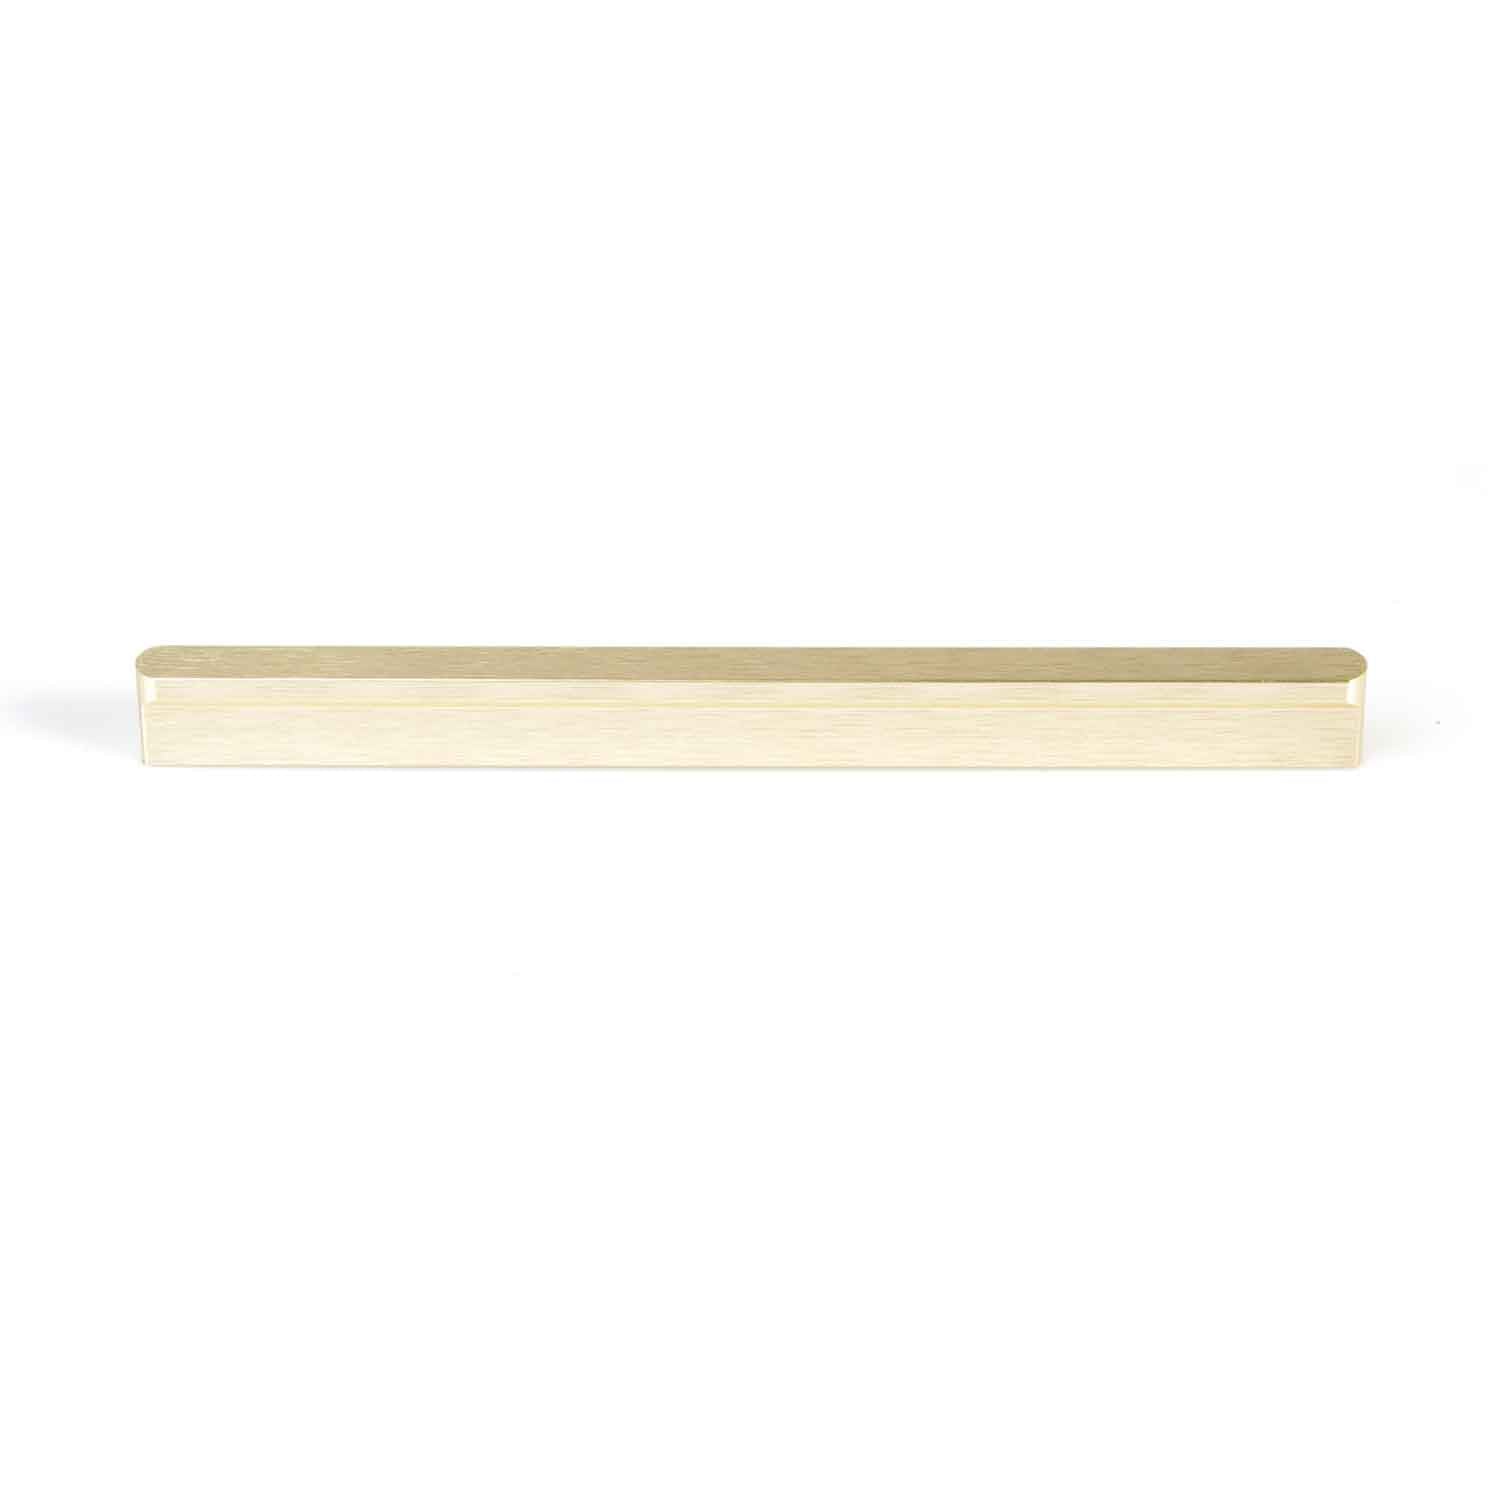 Solid Zinc Furniture Kitchen Bathroom Cabinet Handles Drawer Bar Handle Pull Knob Gold 192mm Deals499